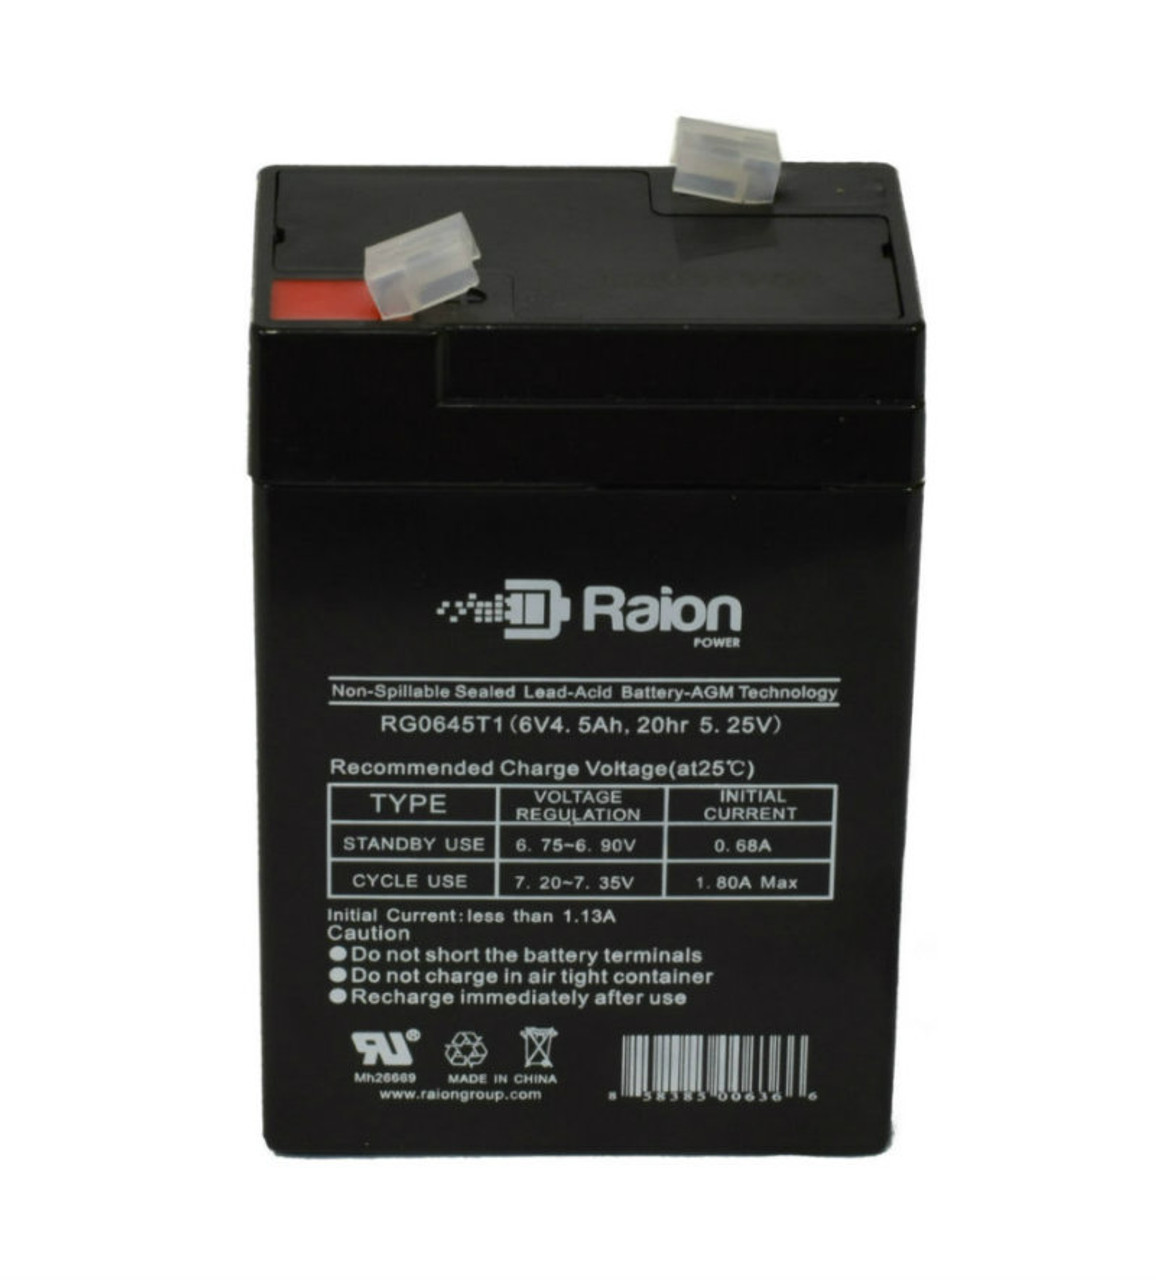 Raion Power RG0645T1 Replacement Battery Cartridge for Sonnenschein A206-4S